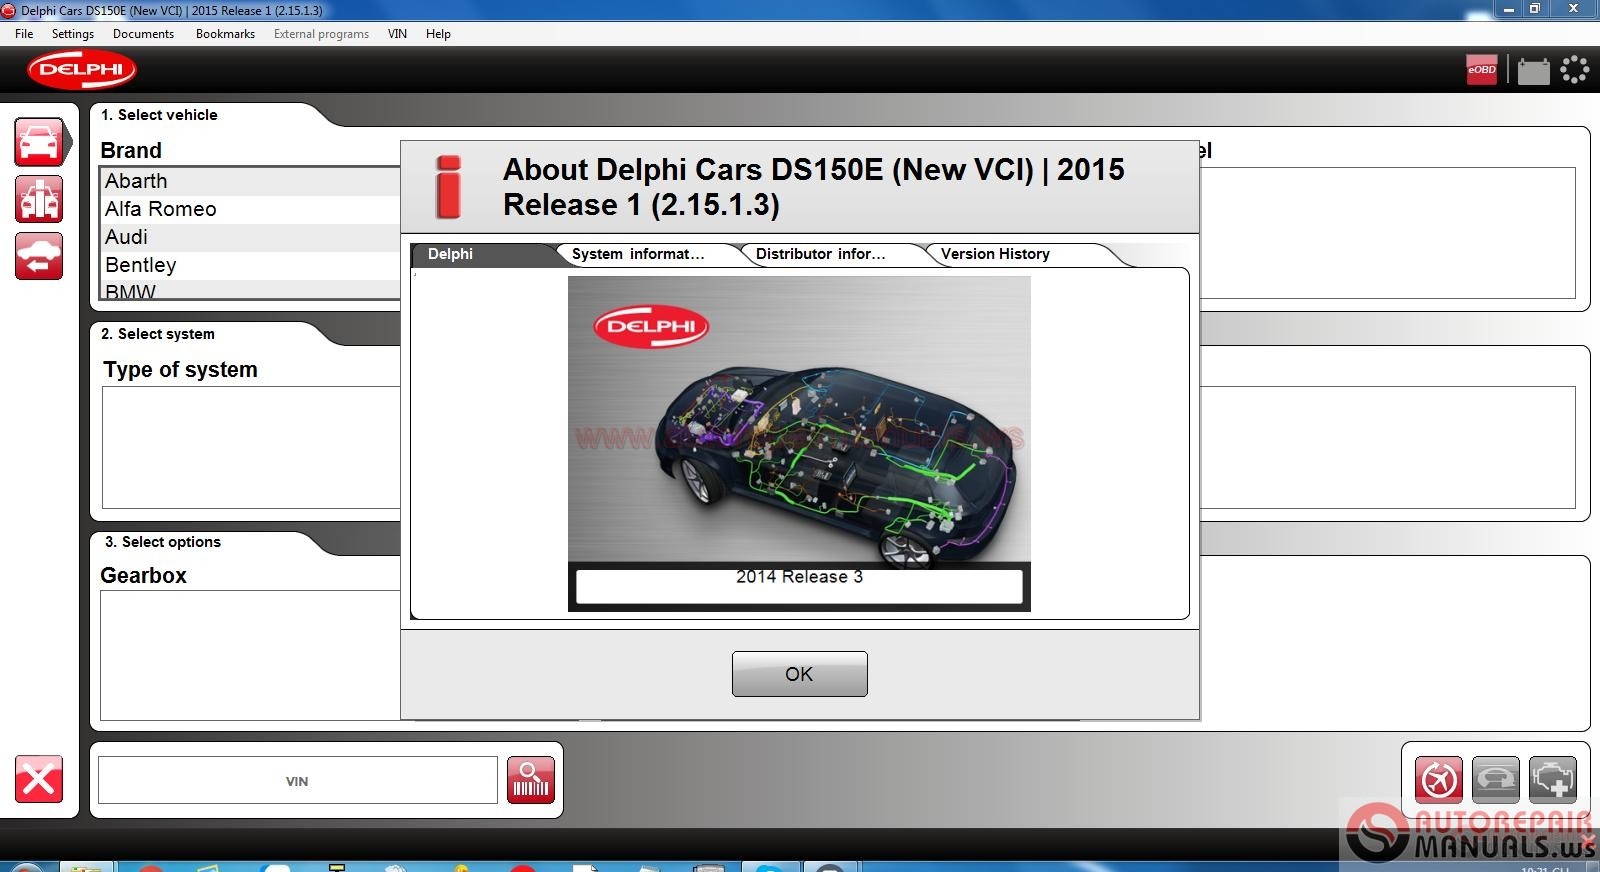 autocom delphi 2013.3 keygen activator download